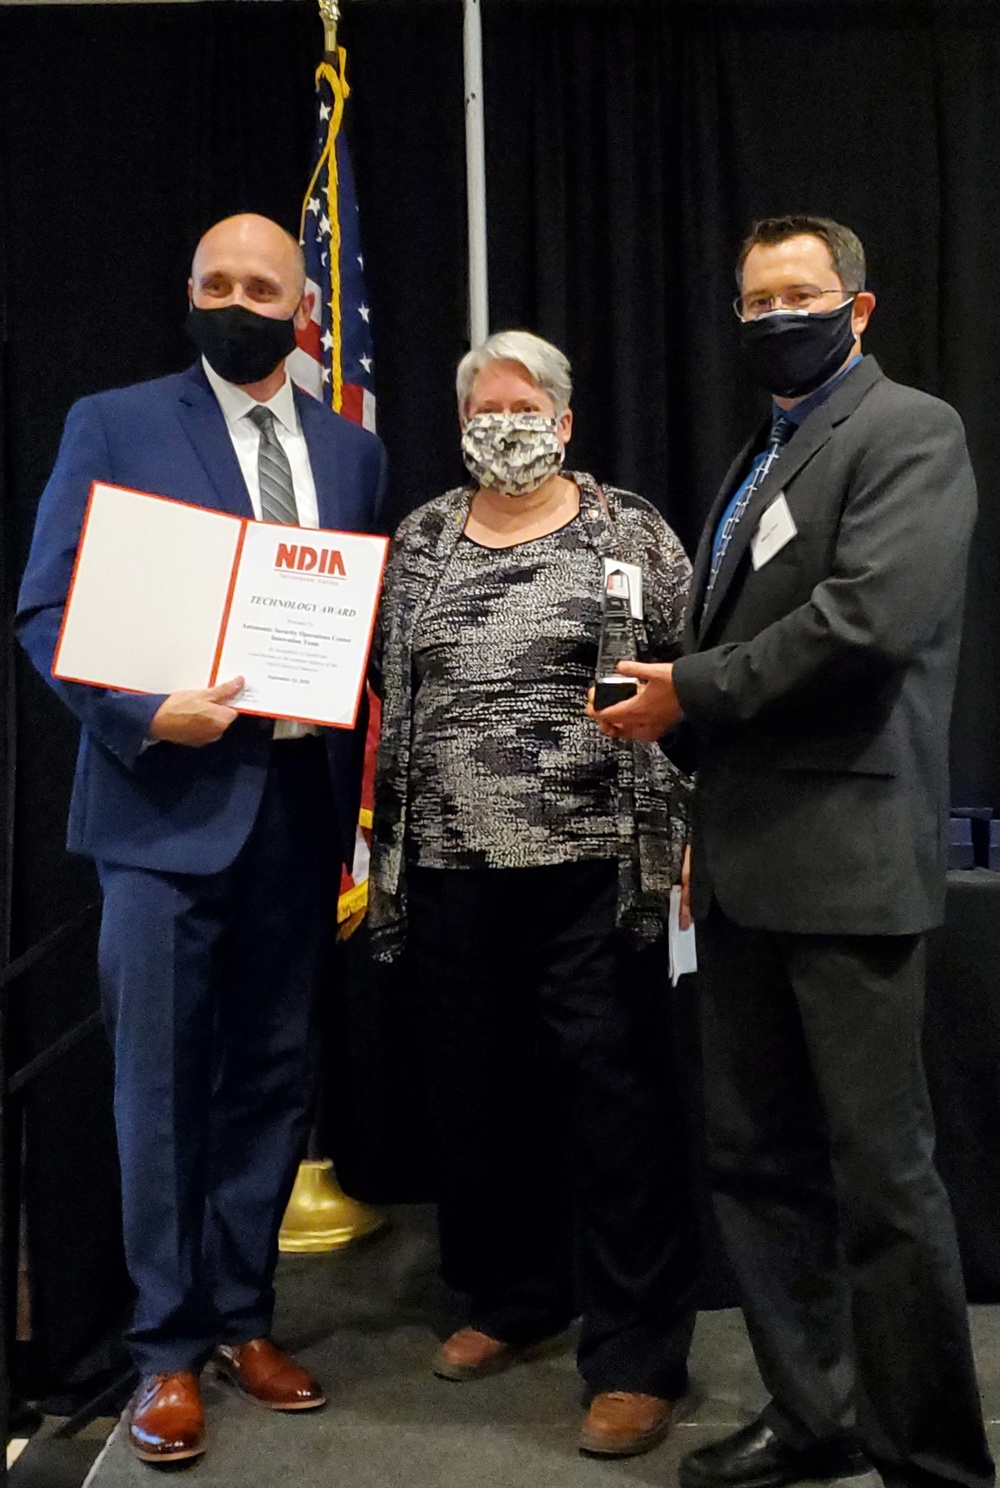 Two AMCOM employees receive NDIA achievement award